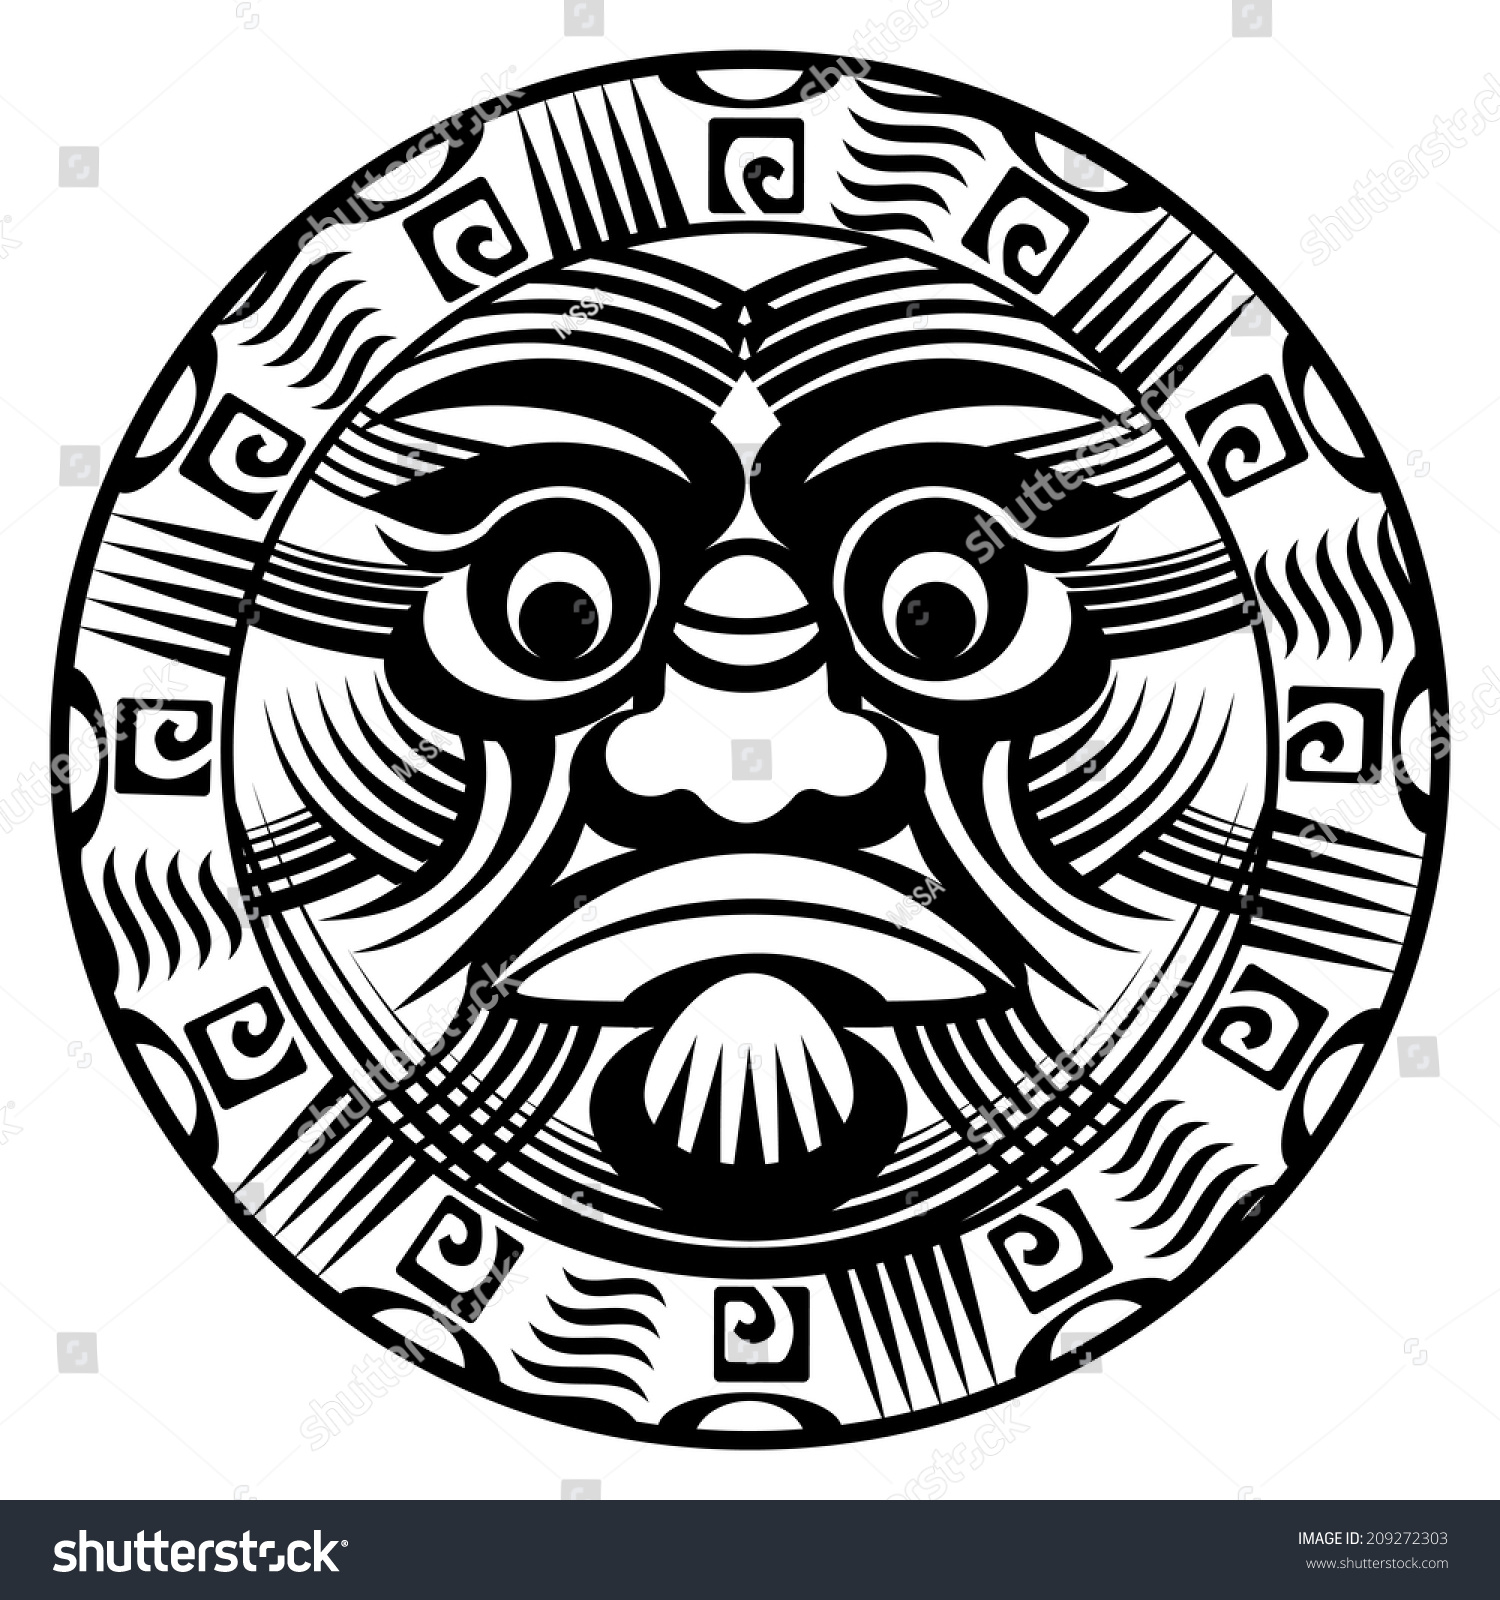 Vector Round Ornamental Polynesian Tattoo Demon Stock Vector 209272303 ...